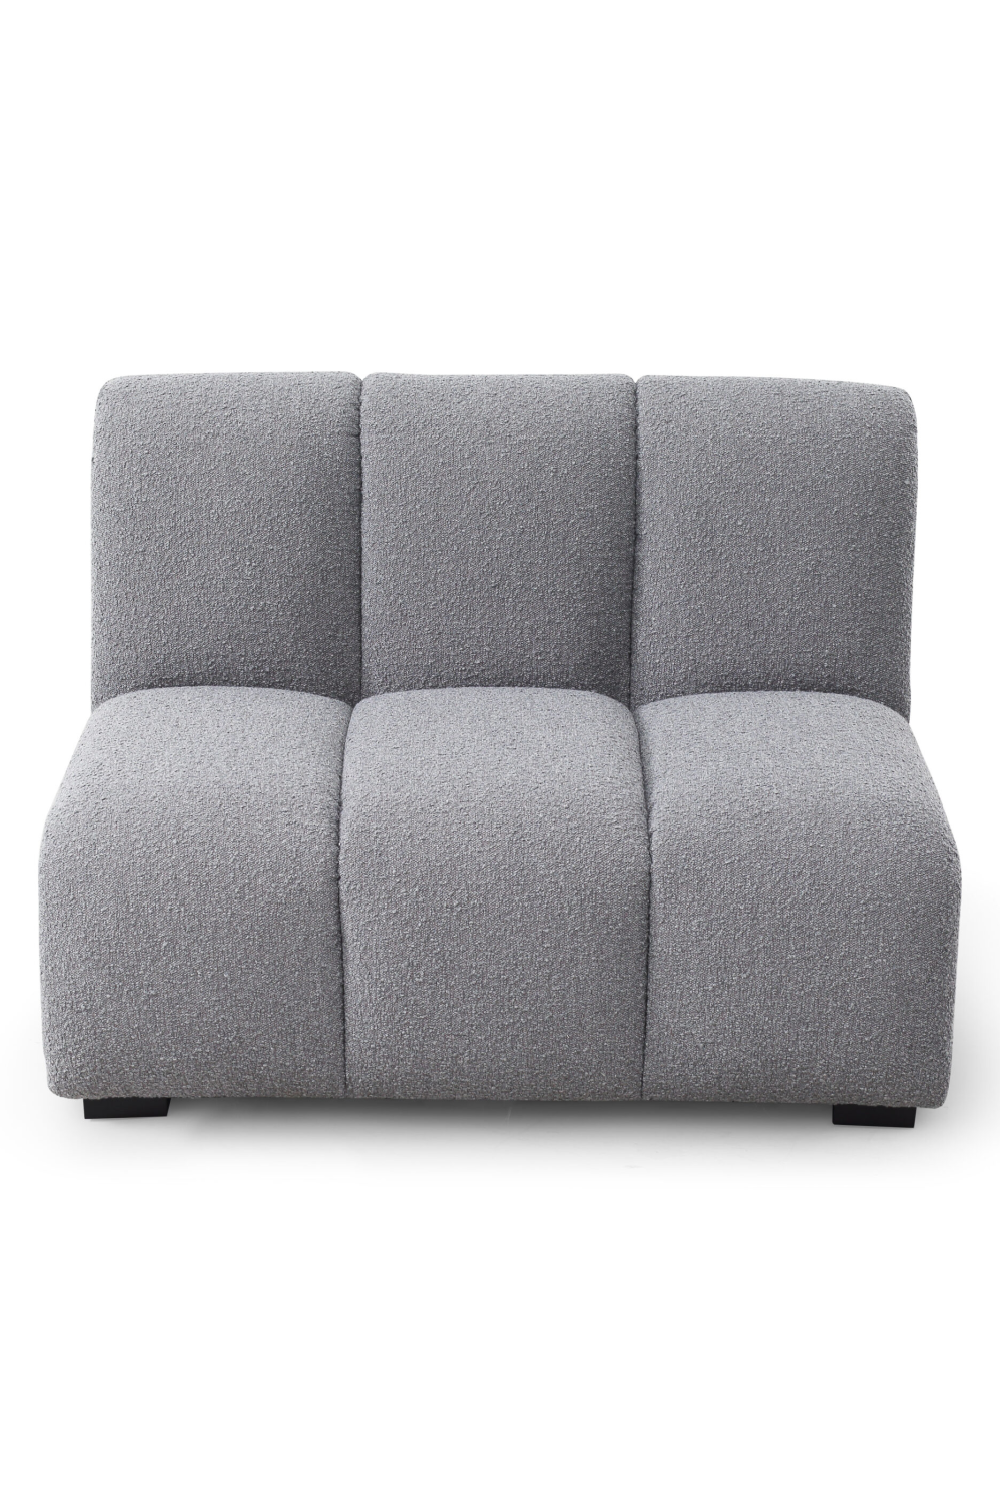 Channel Stitched Single Sofa | Liang & Eimil Ralph | OROA.com